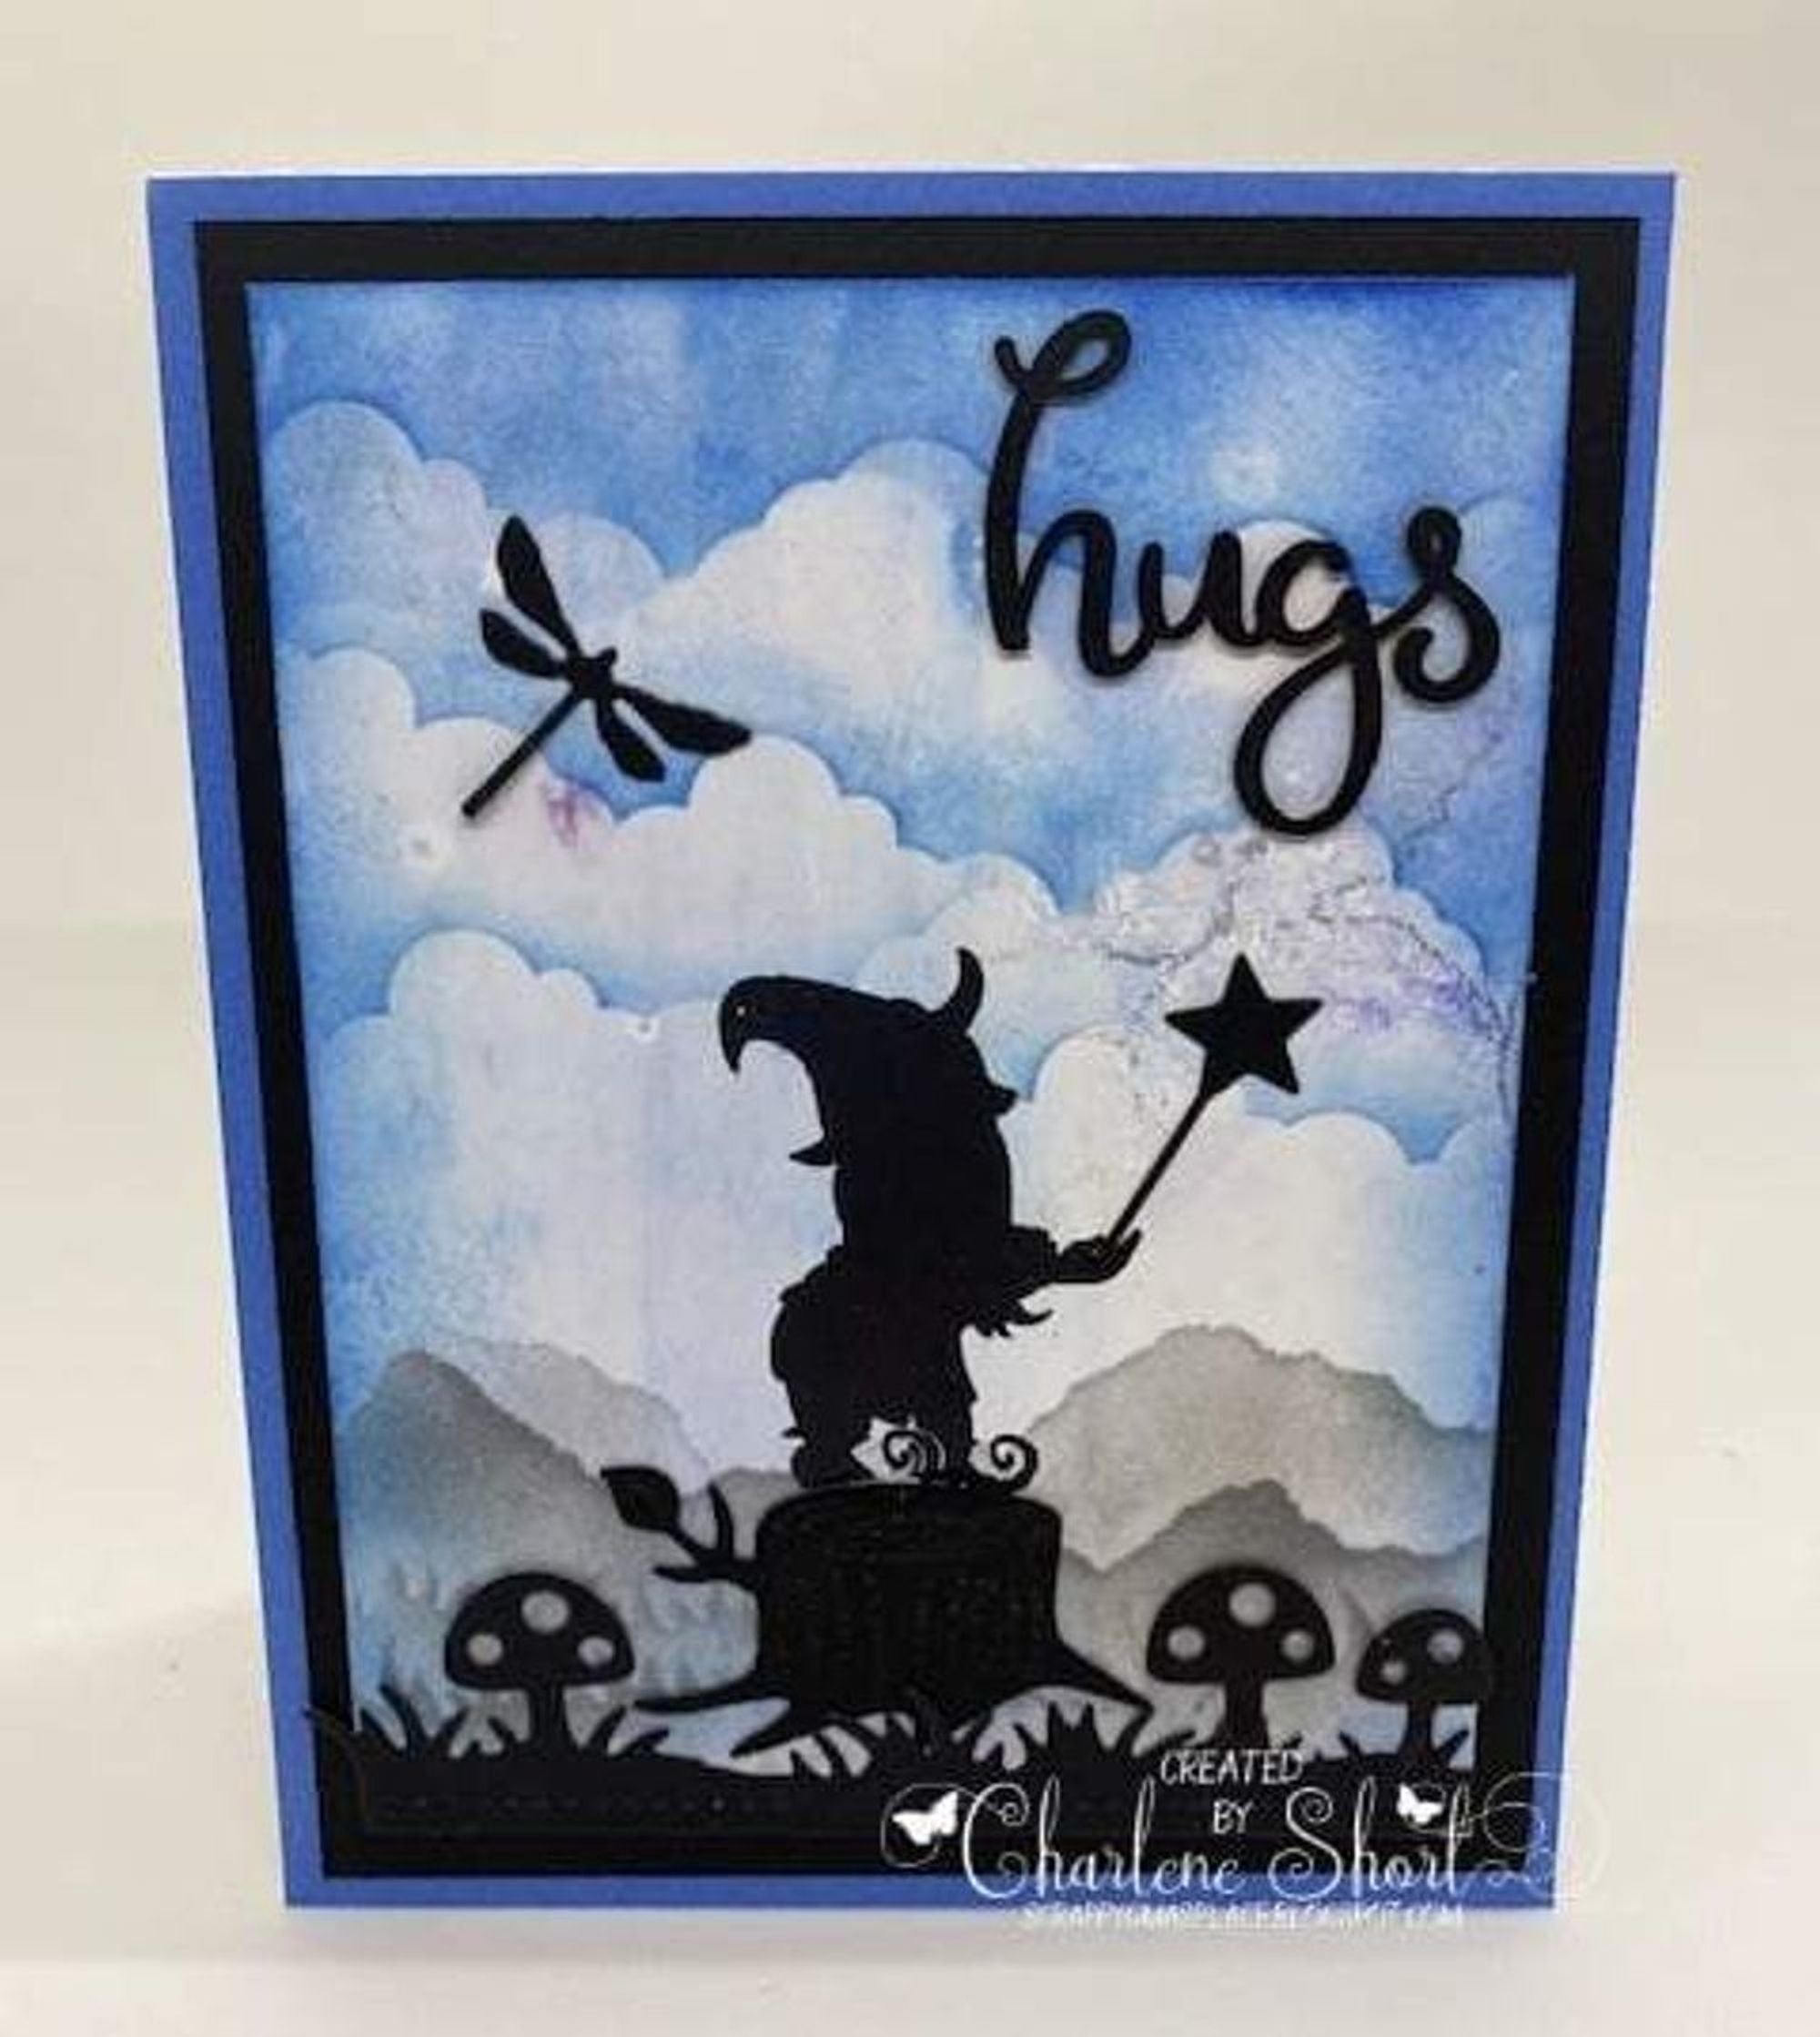 Fairy Hugs Stamps - Haro